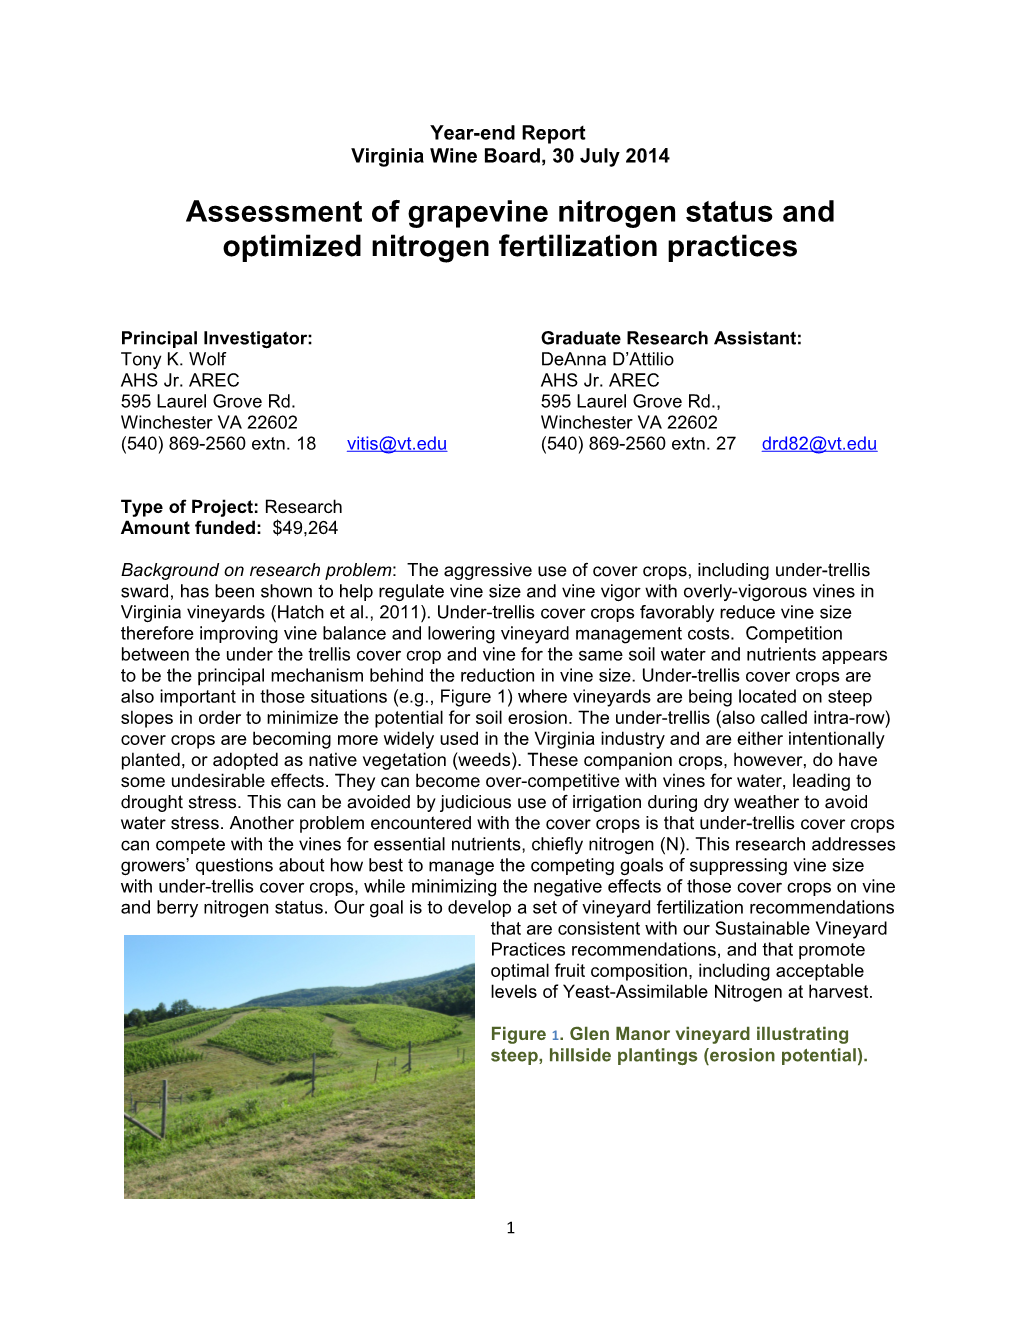 Assessment of Grapevine Nitrogen Status and Optimized Nitrogen Fertilization Practices